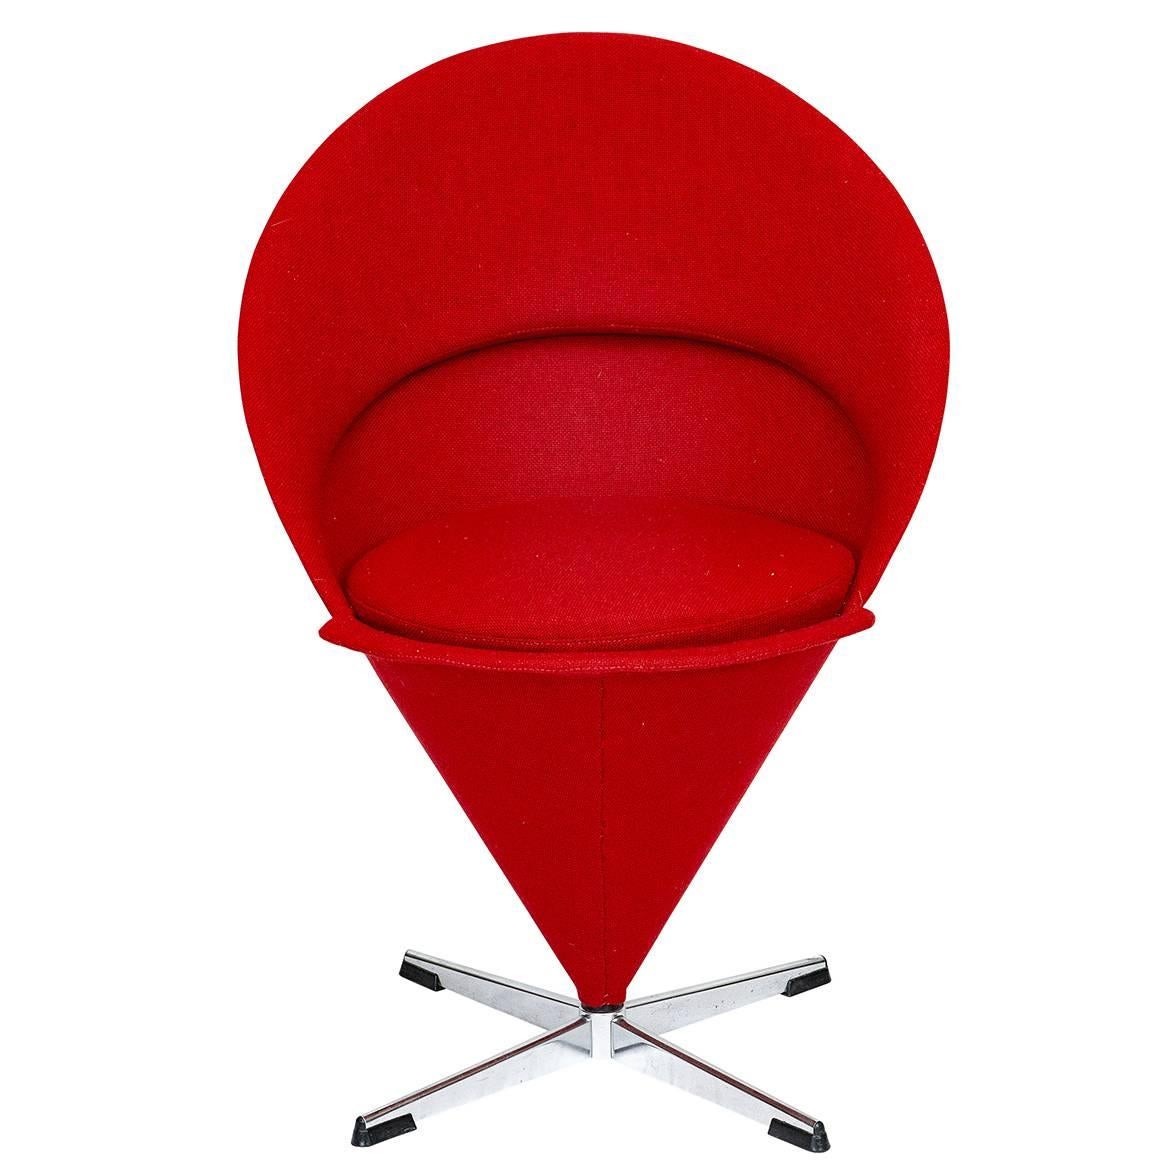 Verner Panton "Cone" Chair